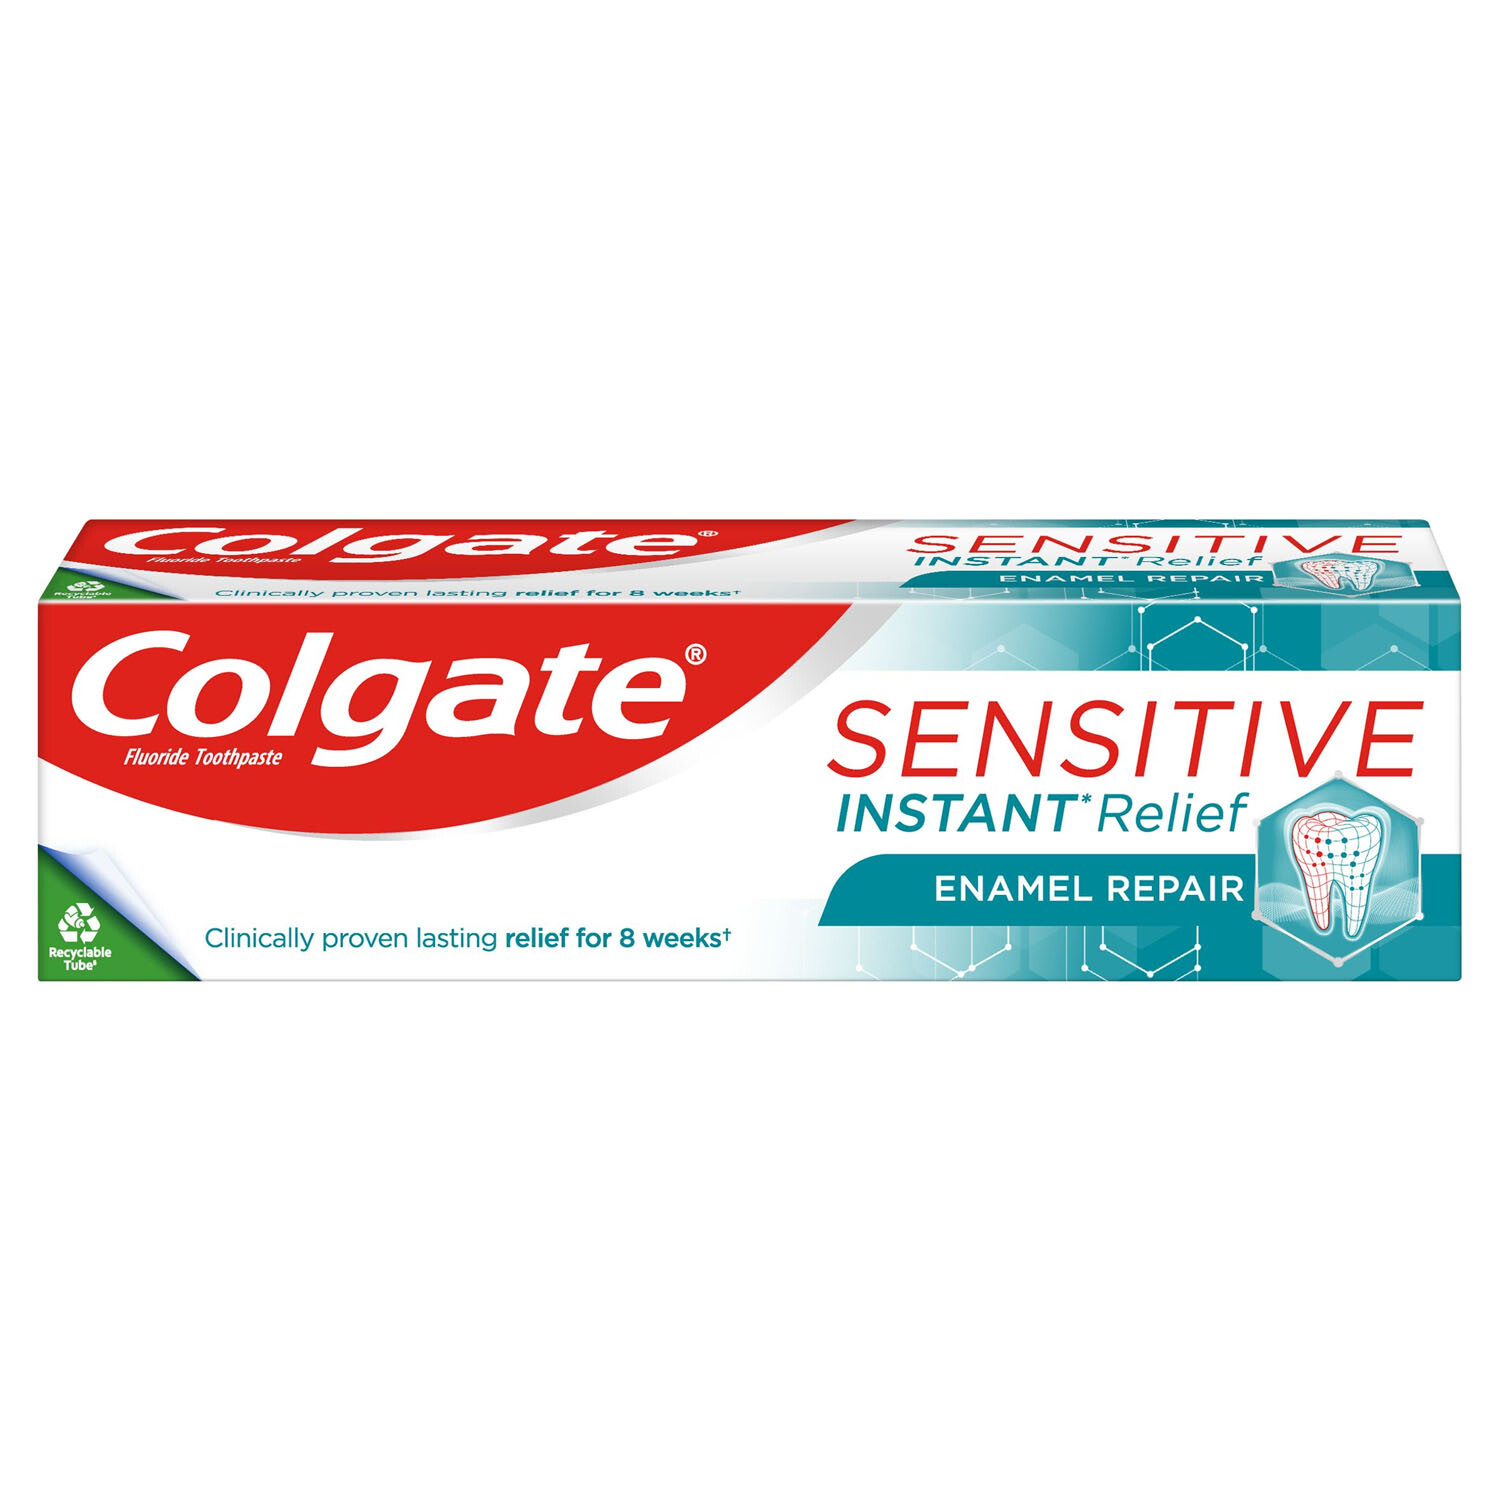 Colgate Sensitive Instant Relief Enamel Repair Toothpaste Image 1